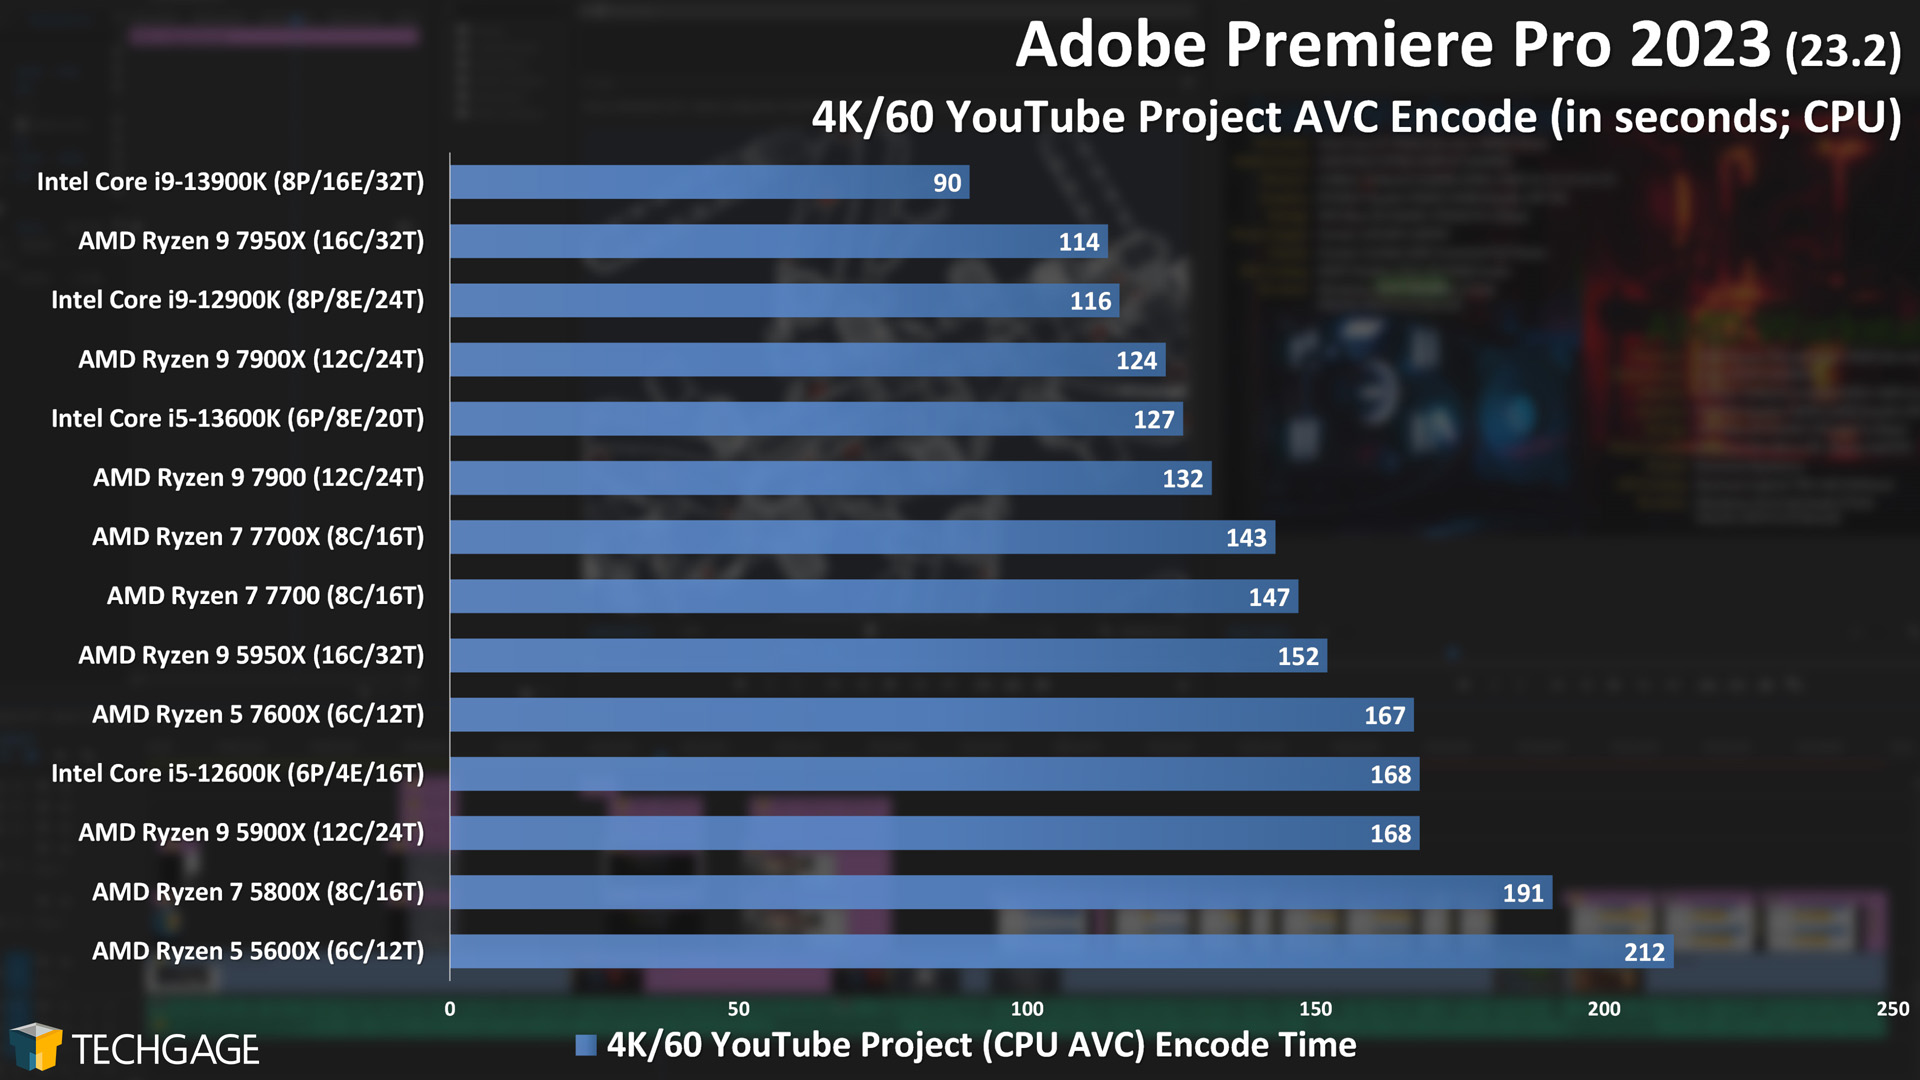 Adobe Premiere Pro - CPU Encoding Performance (4K60 YouTube Project)